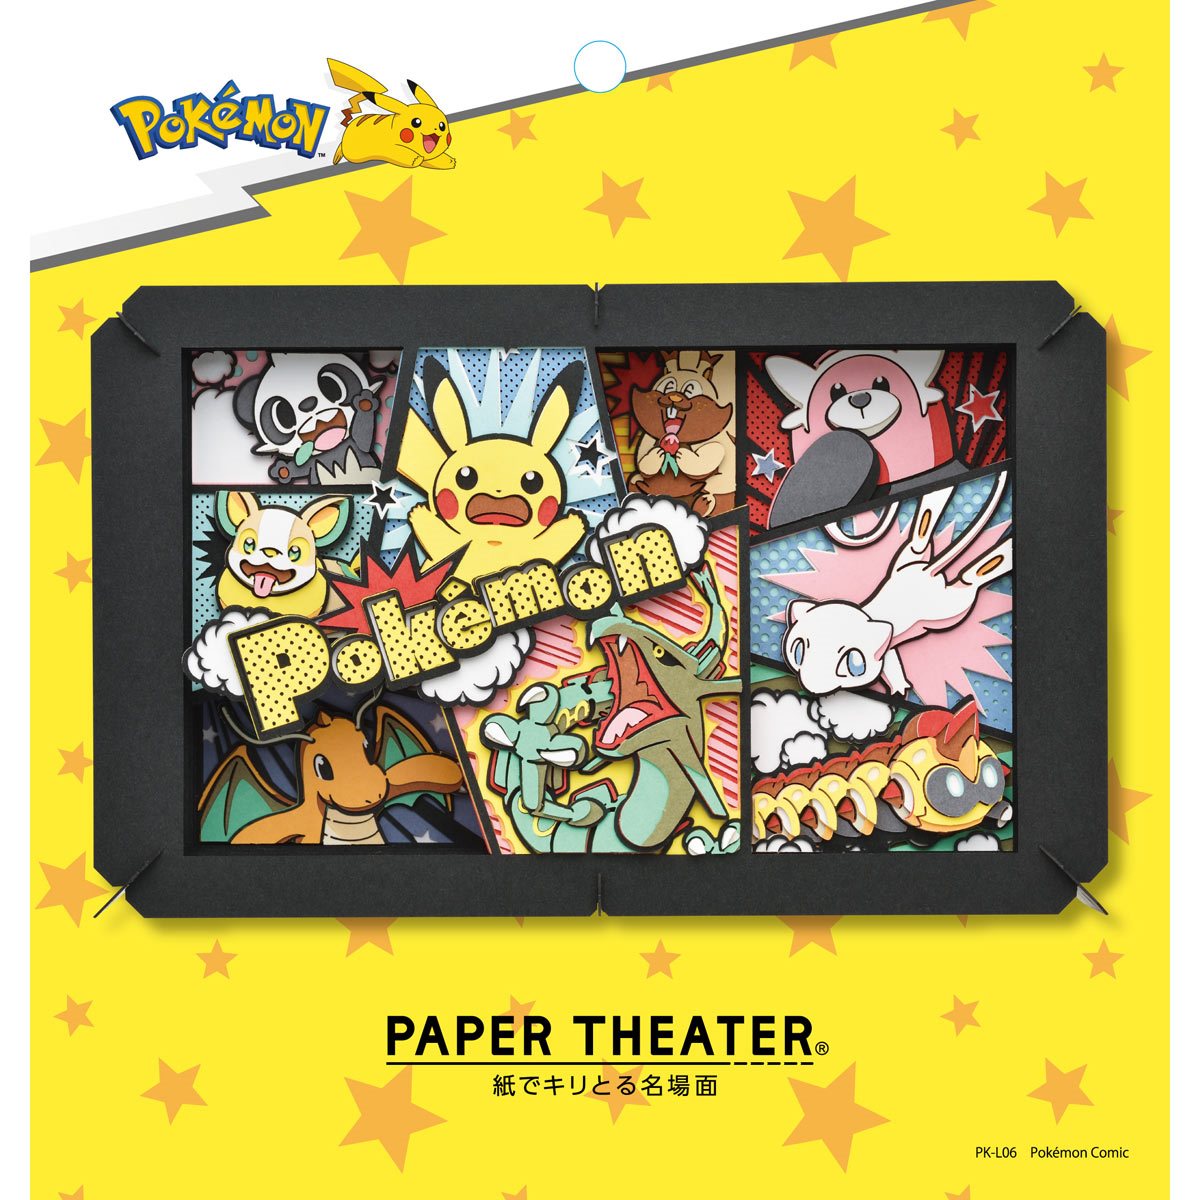 Pokemon Center Kyoto - Pokemon Newspaper